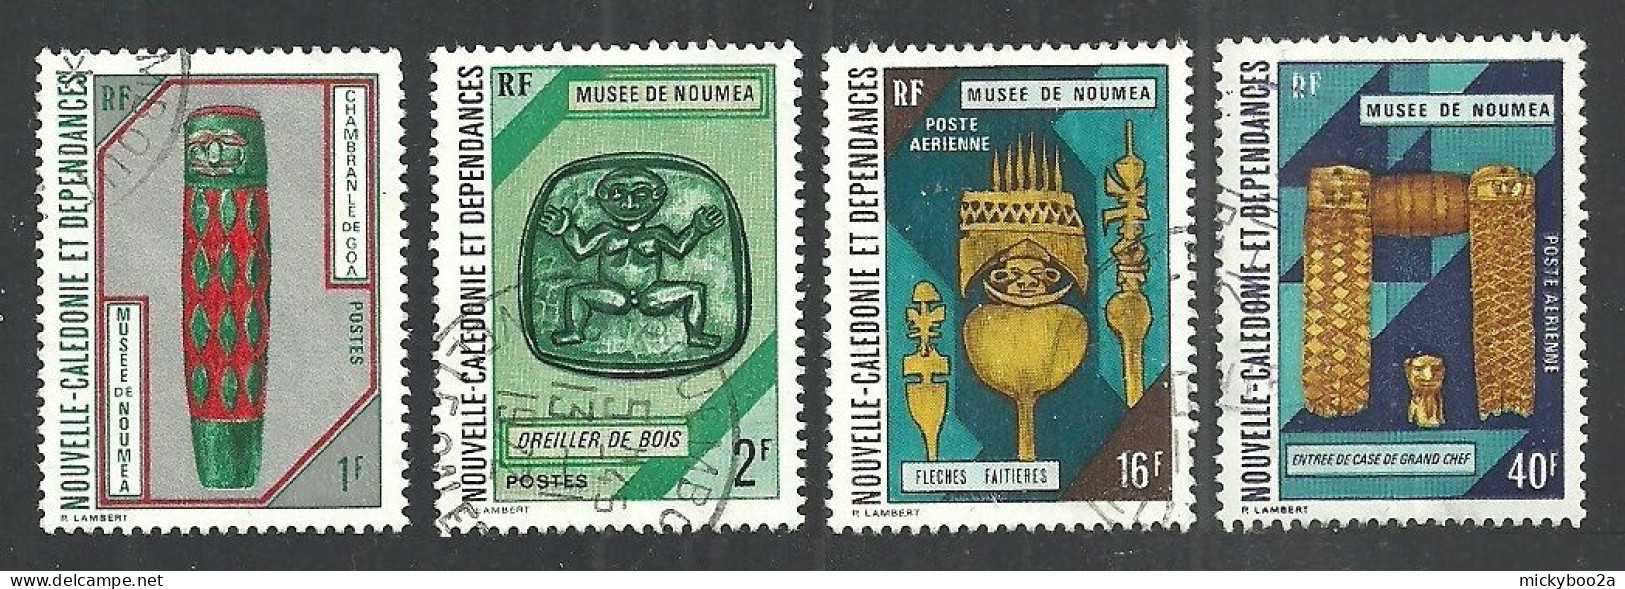 NEW CALEDONIA 1972 NOUMEA MUSEUM EXHIBITS VALUES USED - Gebraucht